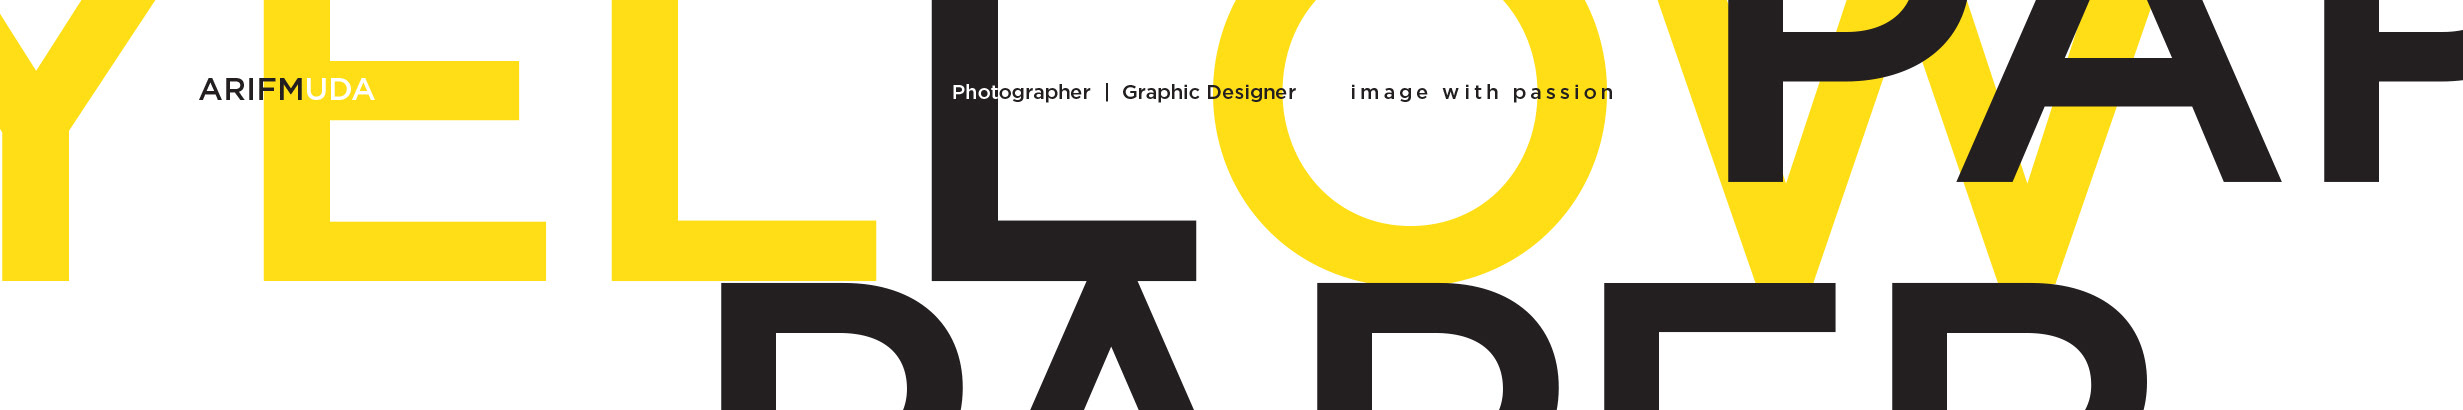 ArifMuda+yellowpaper design's profile banner